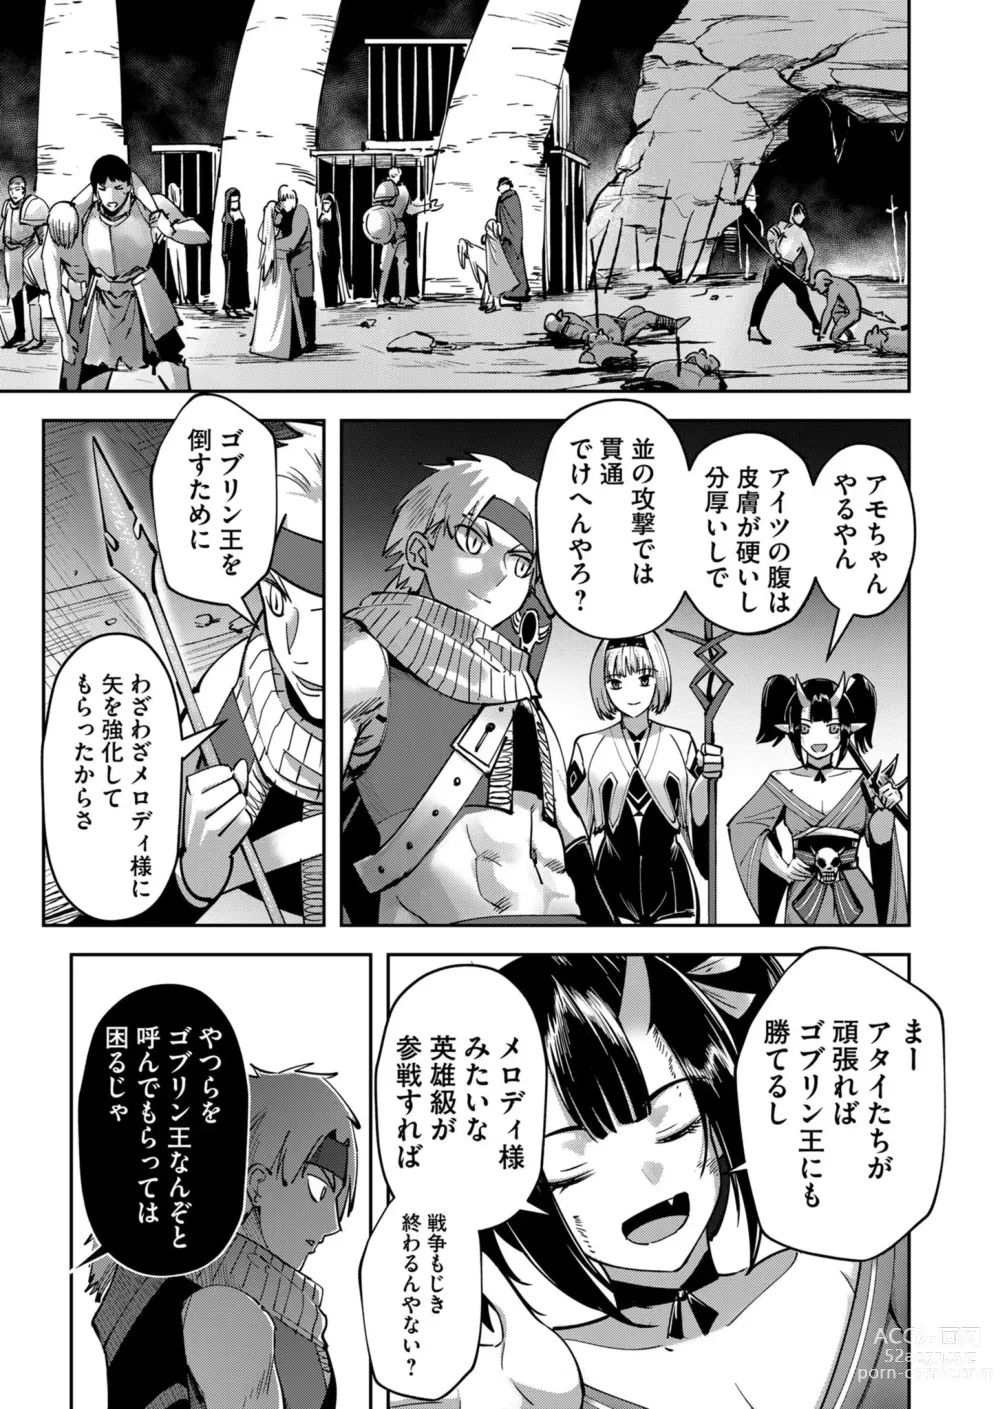 Page 157 of manga Kichiku Eiyuu Vol.03